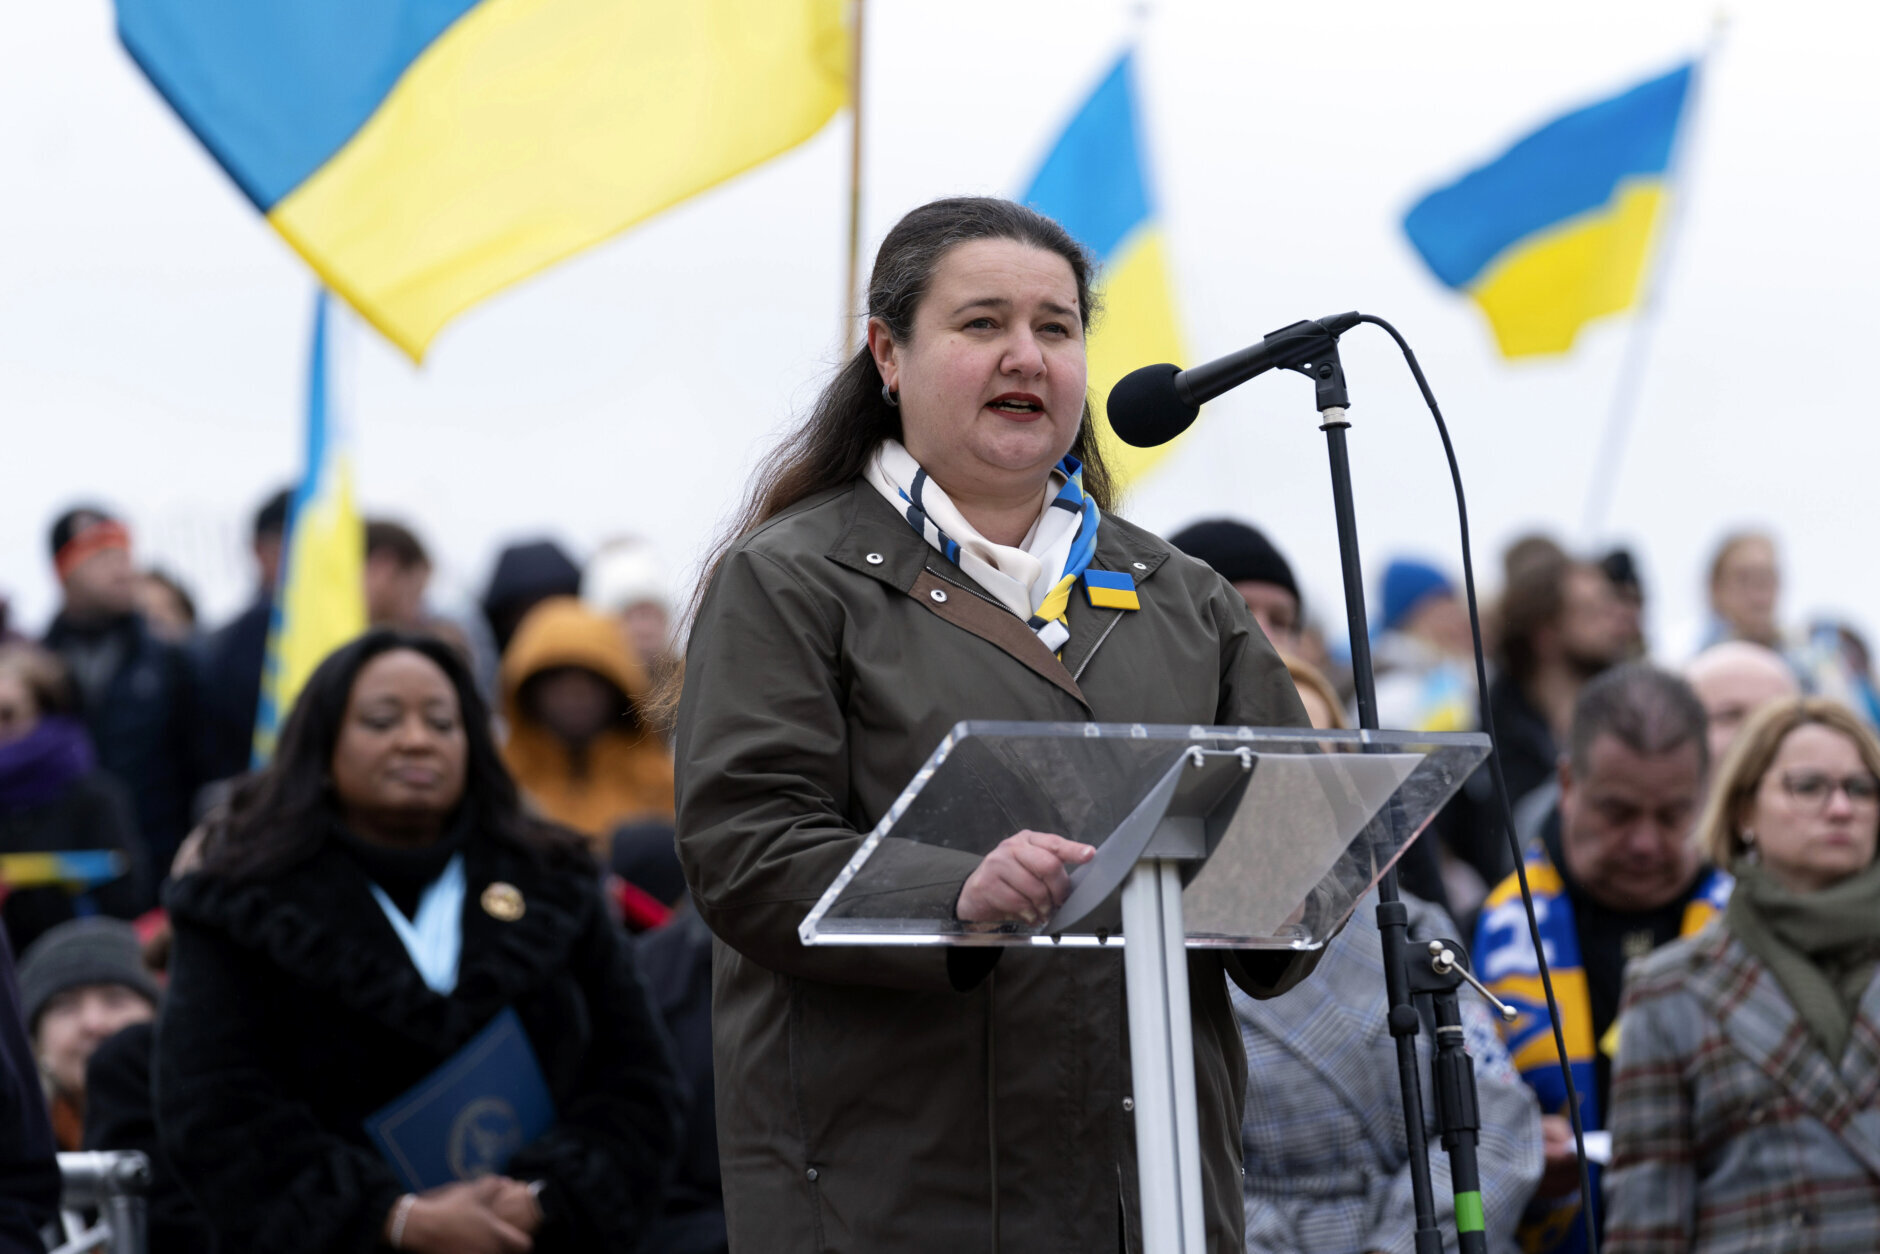 Ukraine's Ambassador to the United States Oksana Markarova speaks during a rally at the Lincoln Memorial in support of Ukraine in Washington, Saturday, Feb. 25, 2023. (AP Photo/Jose Luis Magana)